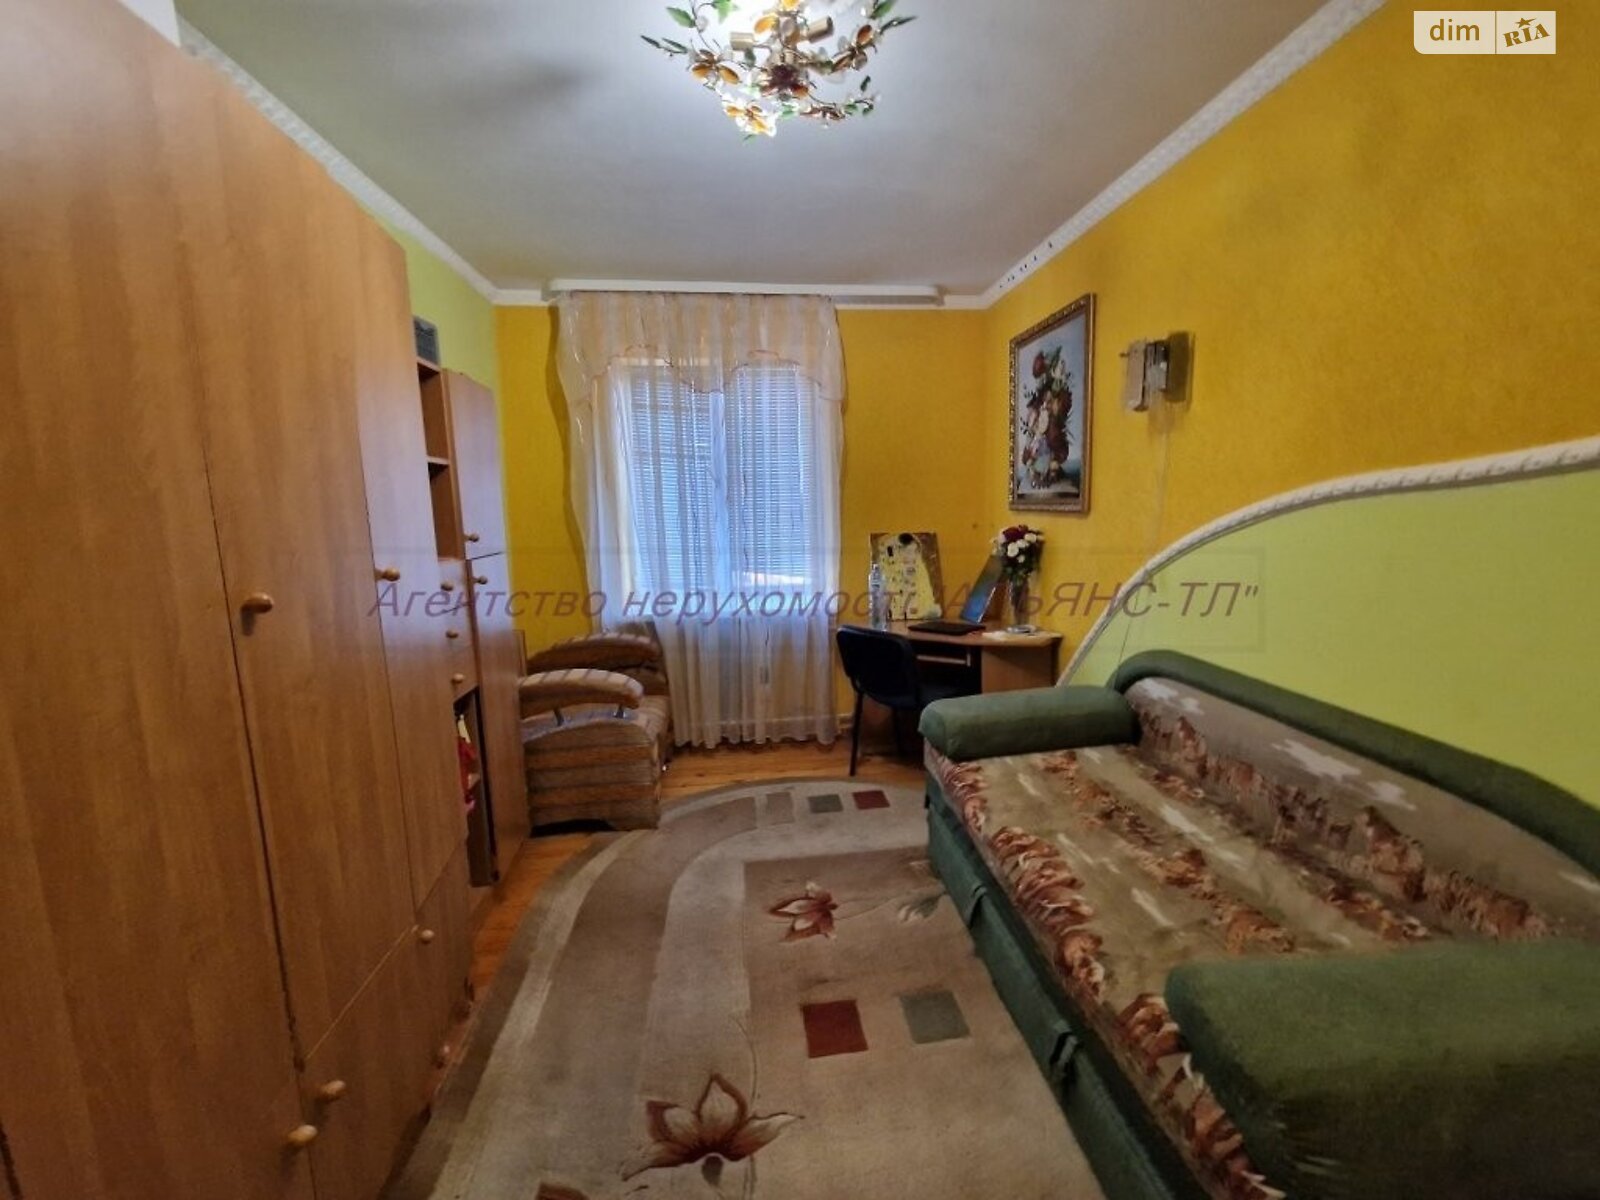 Продажа четырехкомнатной квартиры в Ужгороде, на ул. Кармелюка, район Центр фото 1